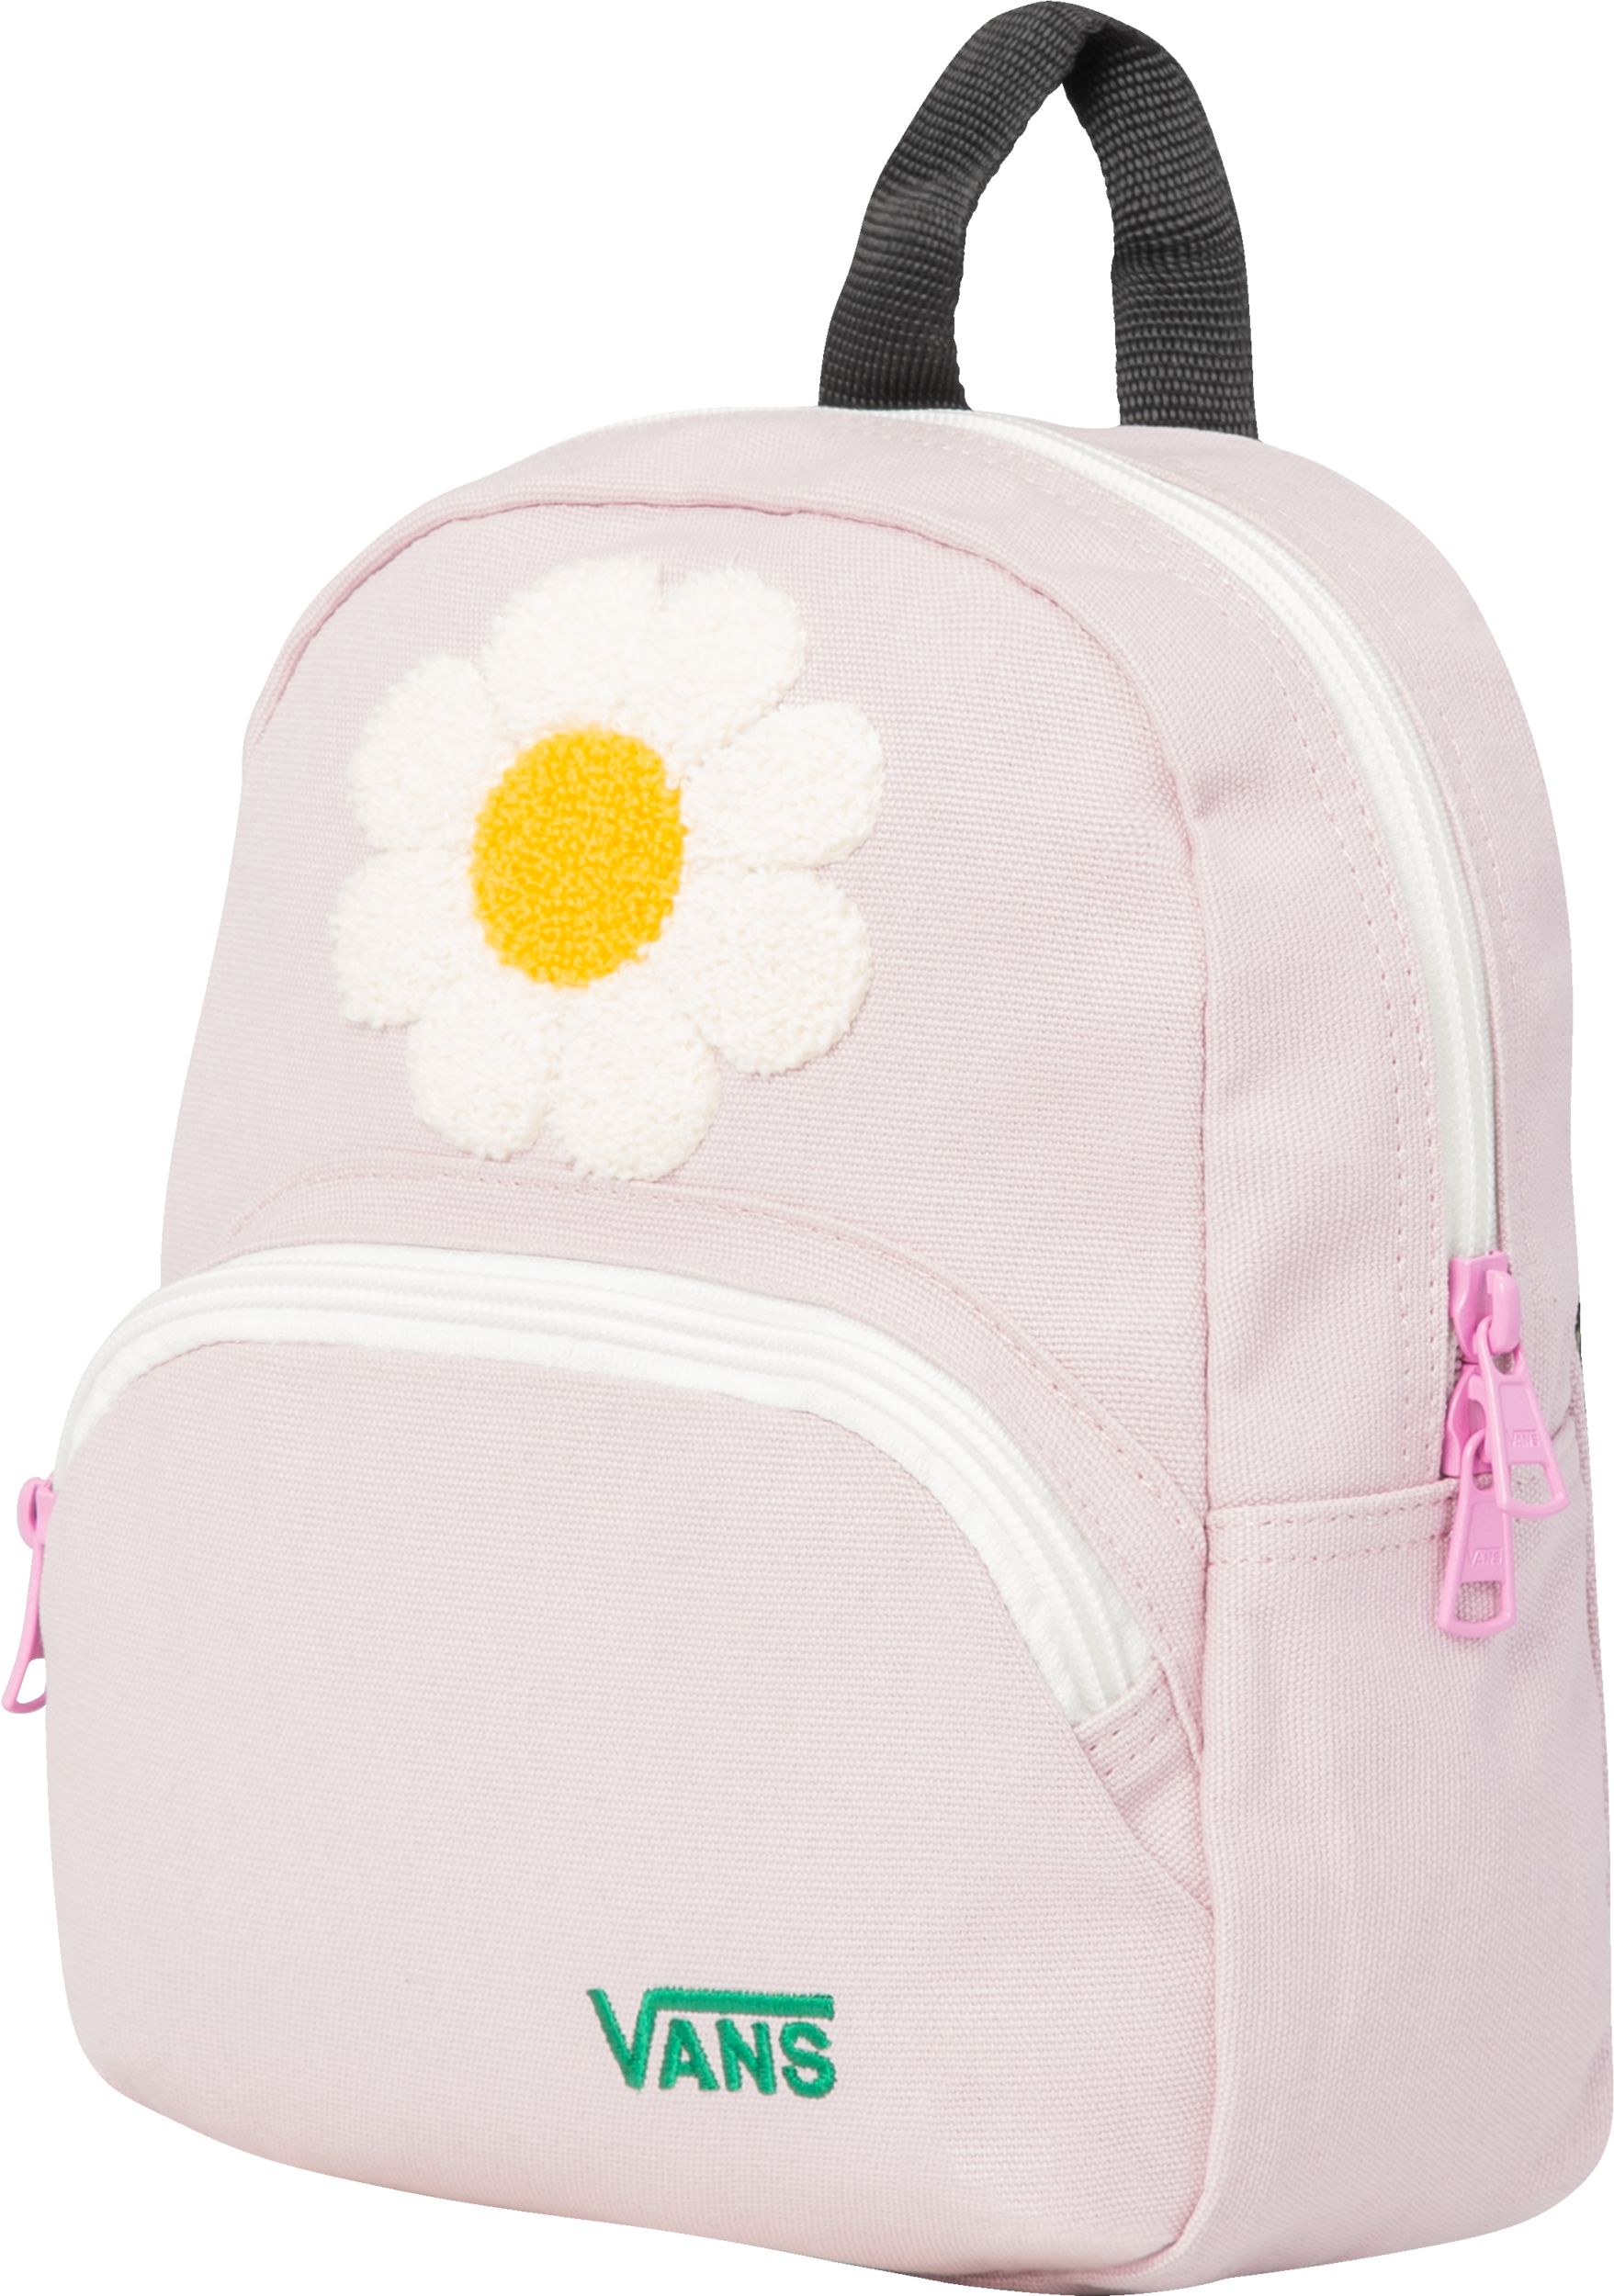 Vans Women's Floral Mini Backpack